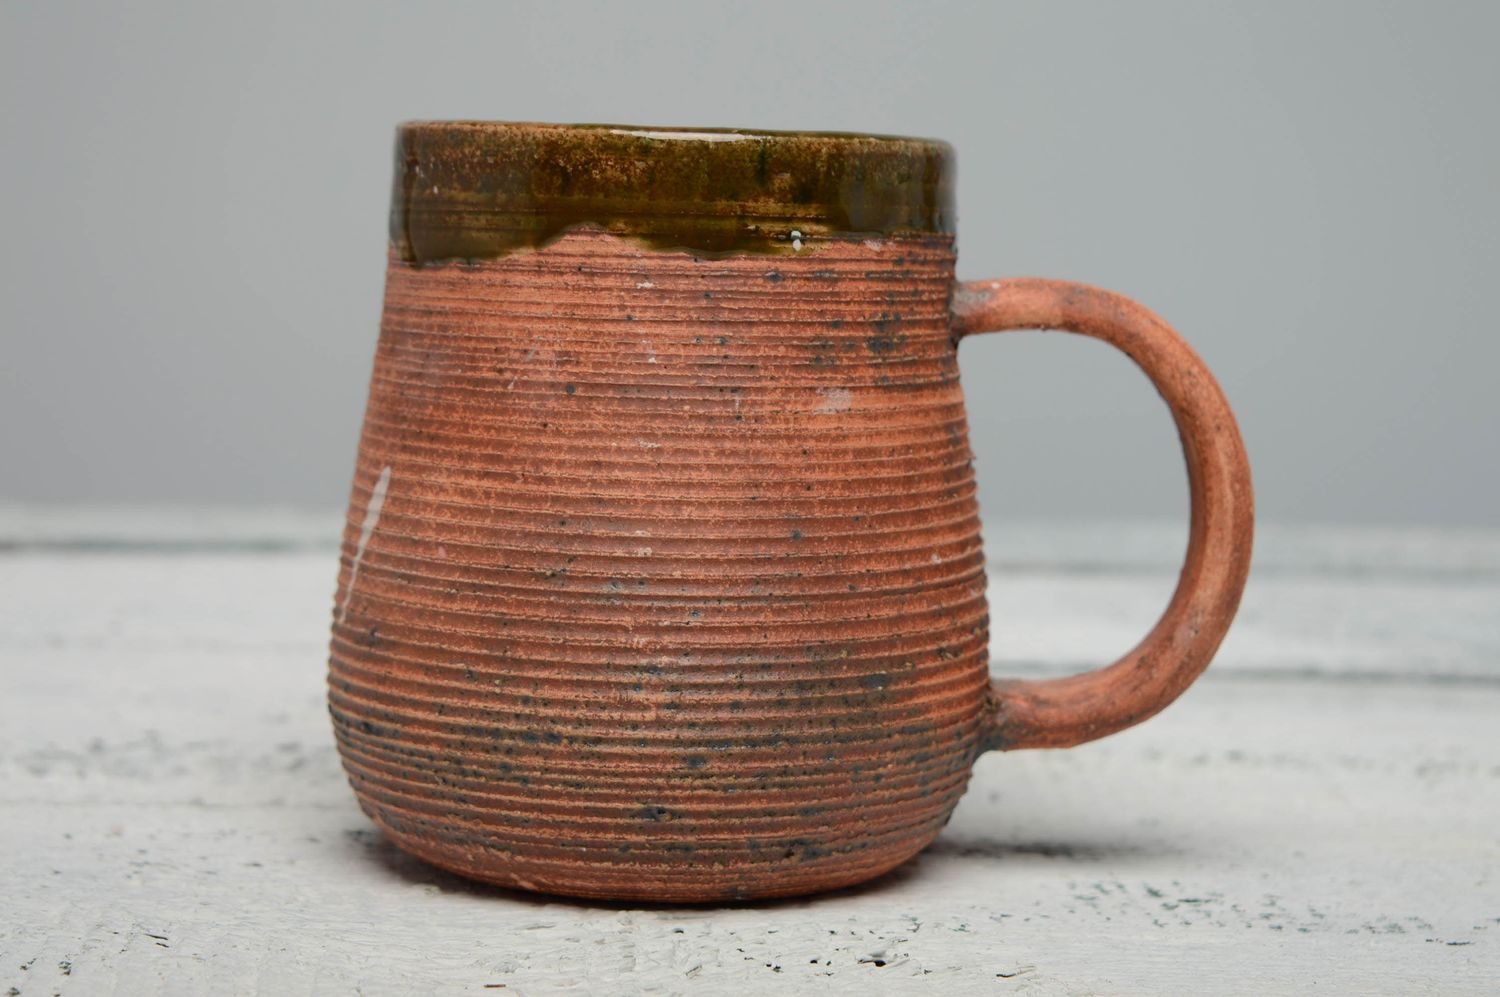 Giant 30 oz ceramic mug dor coffee, tea, beer with handle and rustic style photo 5